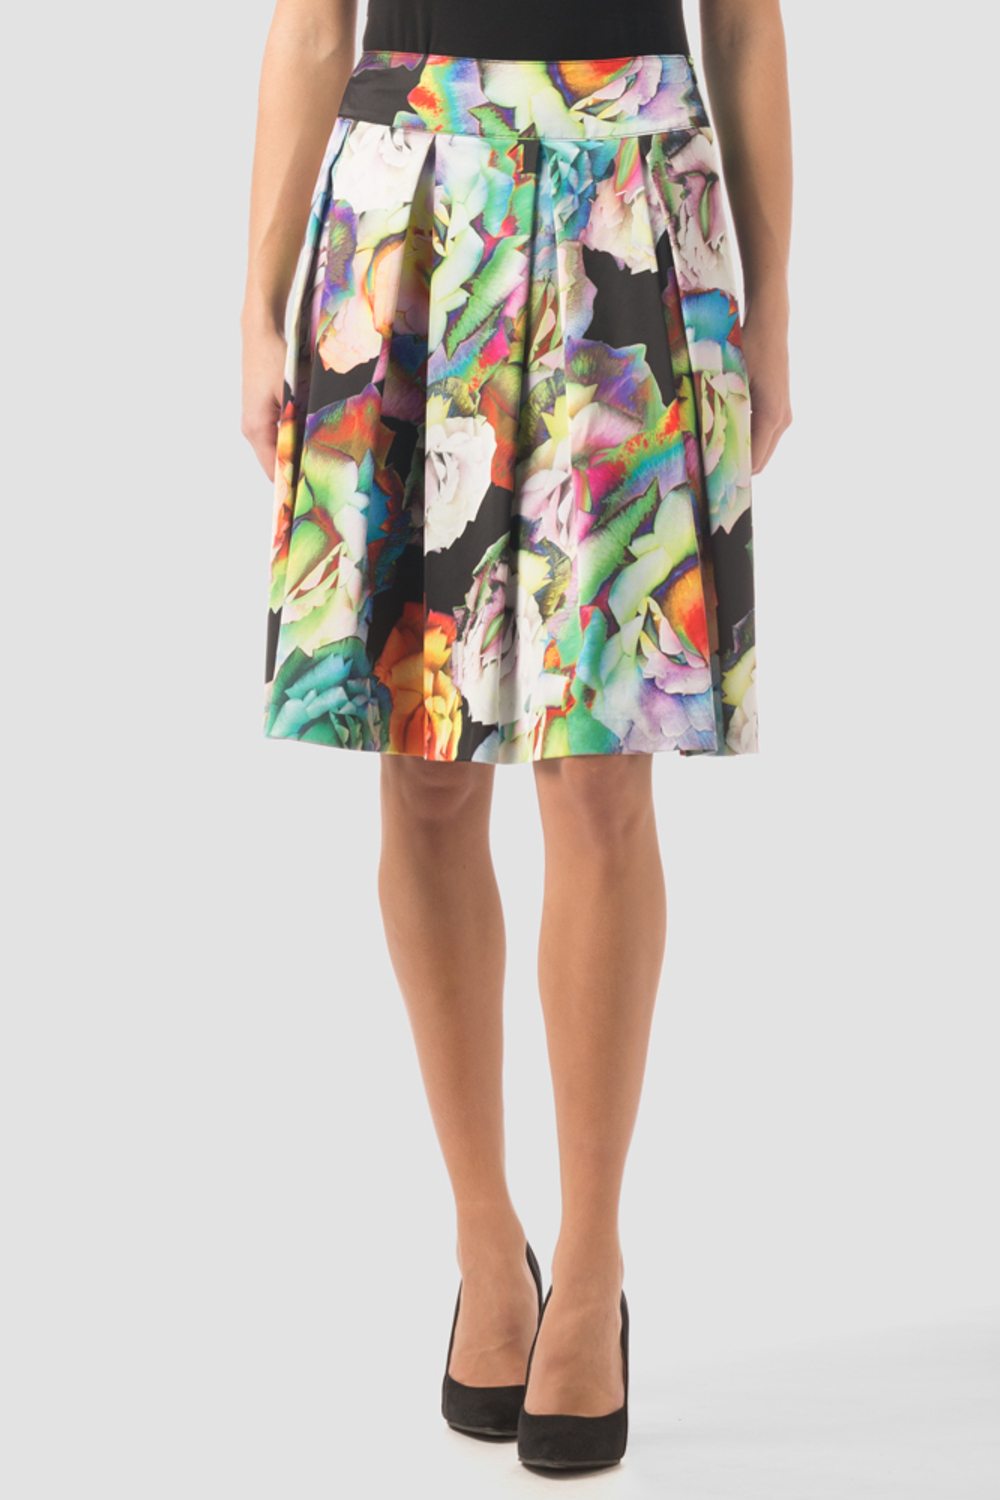 Joseph Ribkoff skirt style 161607. Black/multi